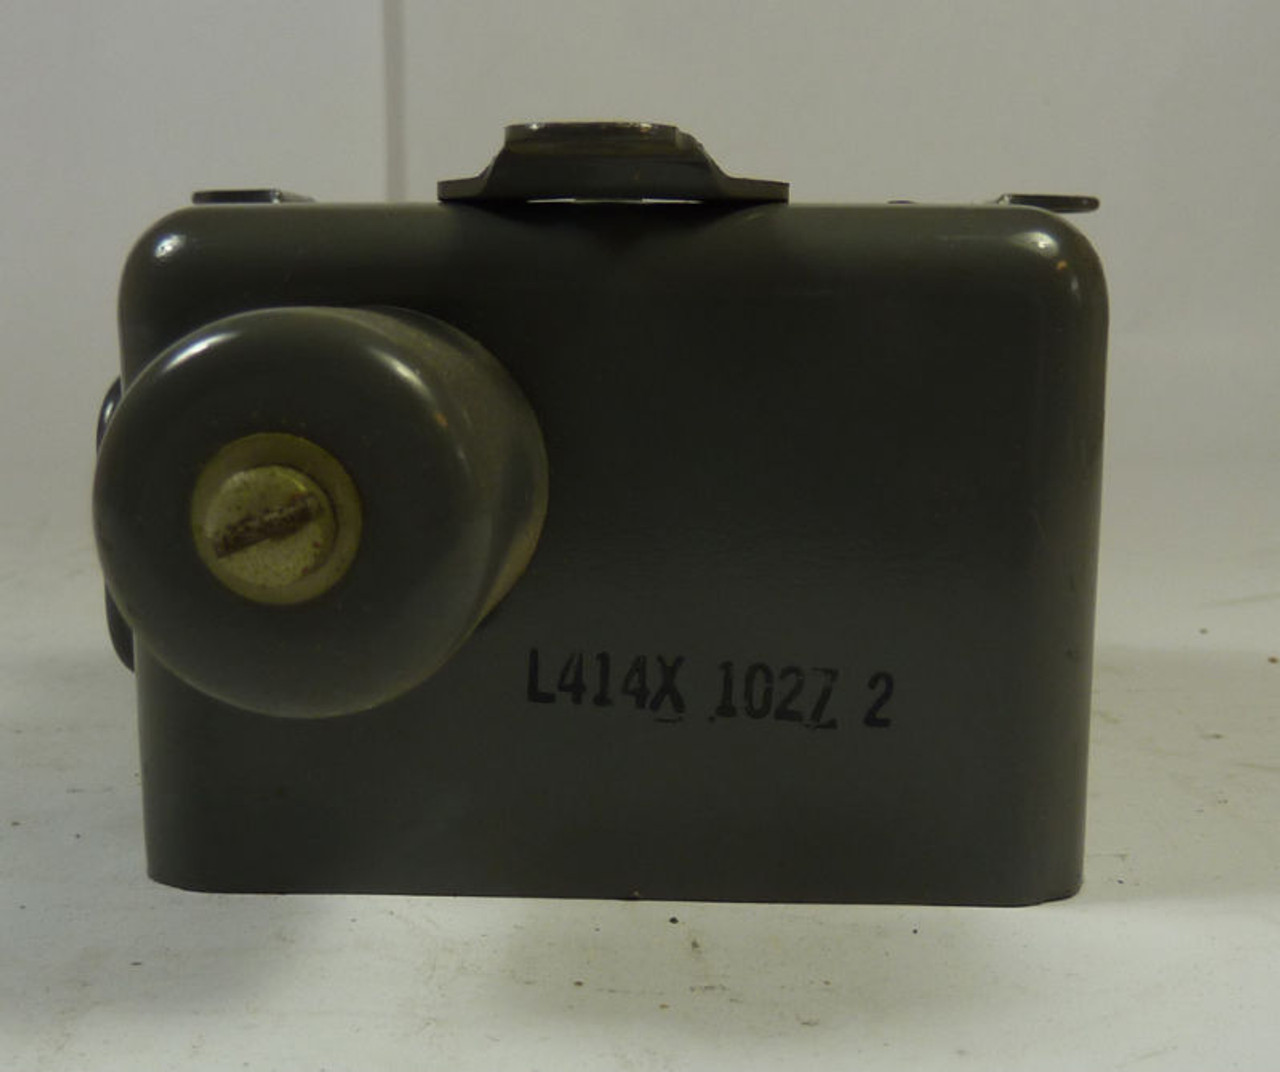 Honeywell L414X-1027-2 Pressure Switch USED